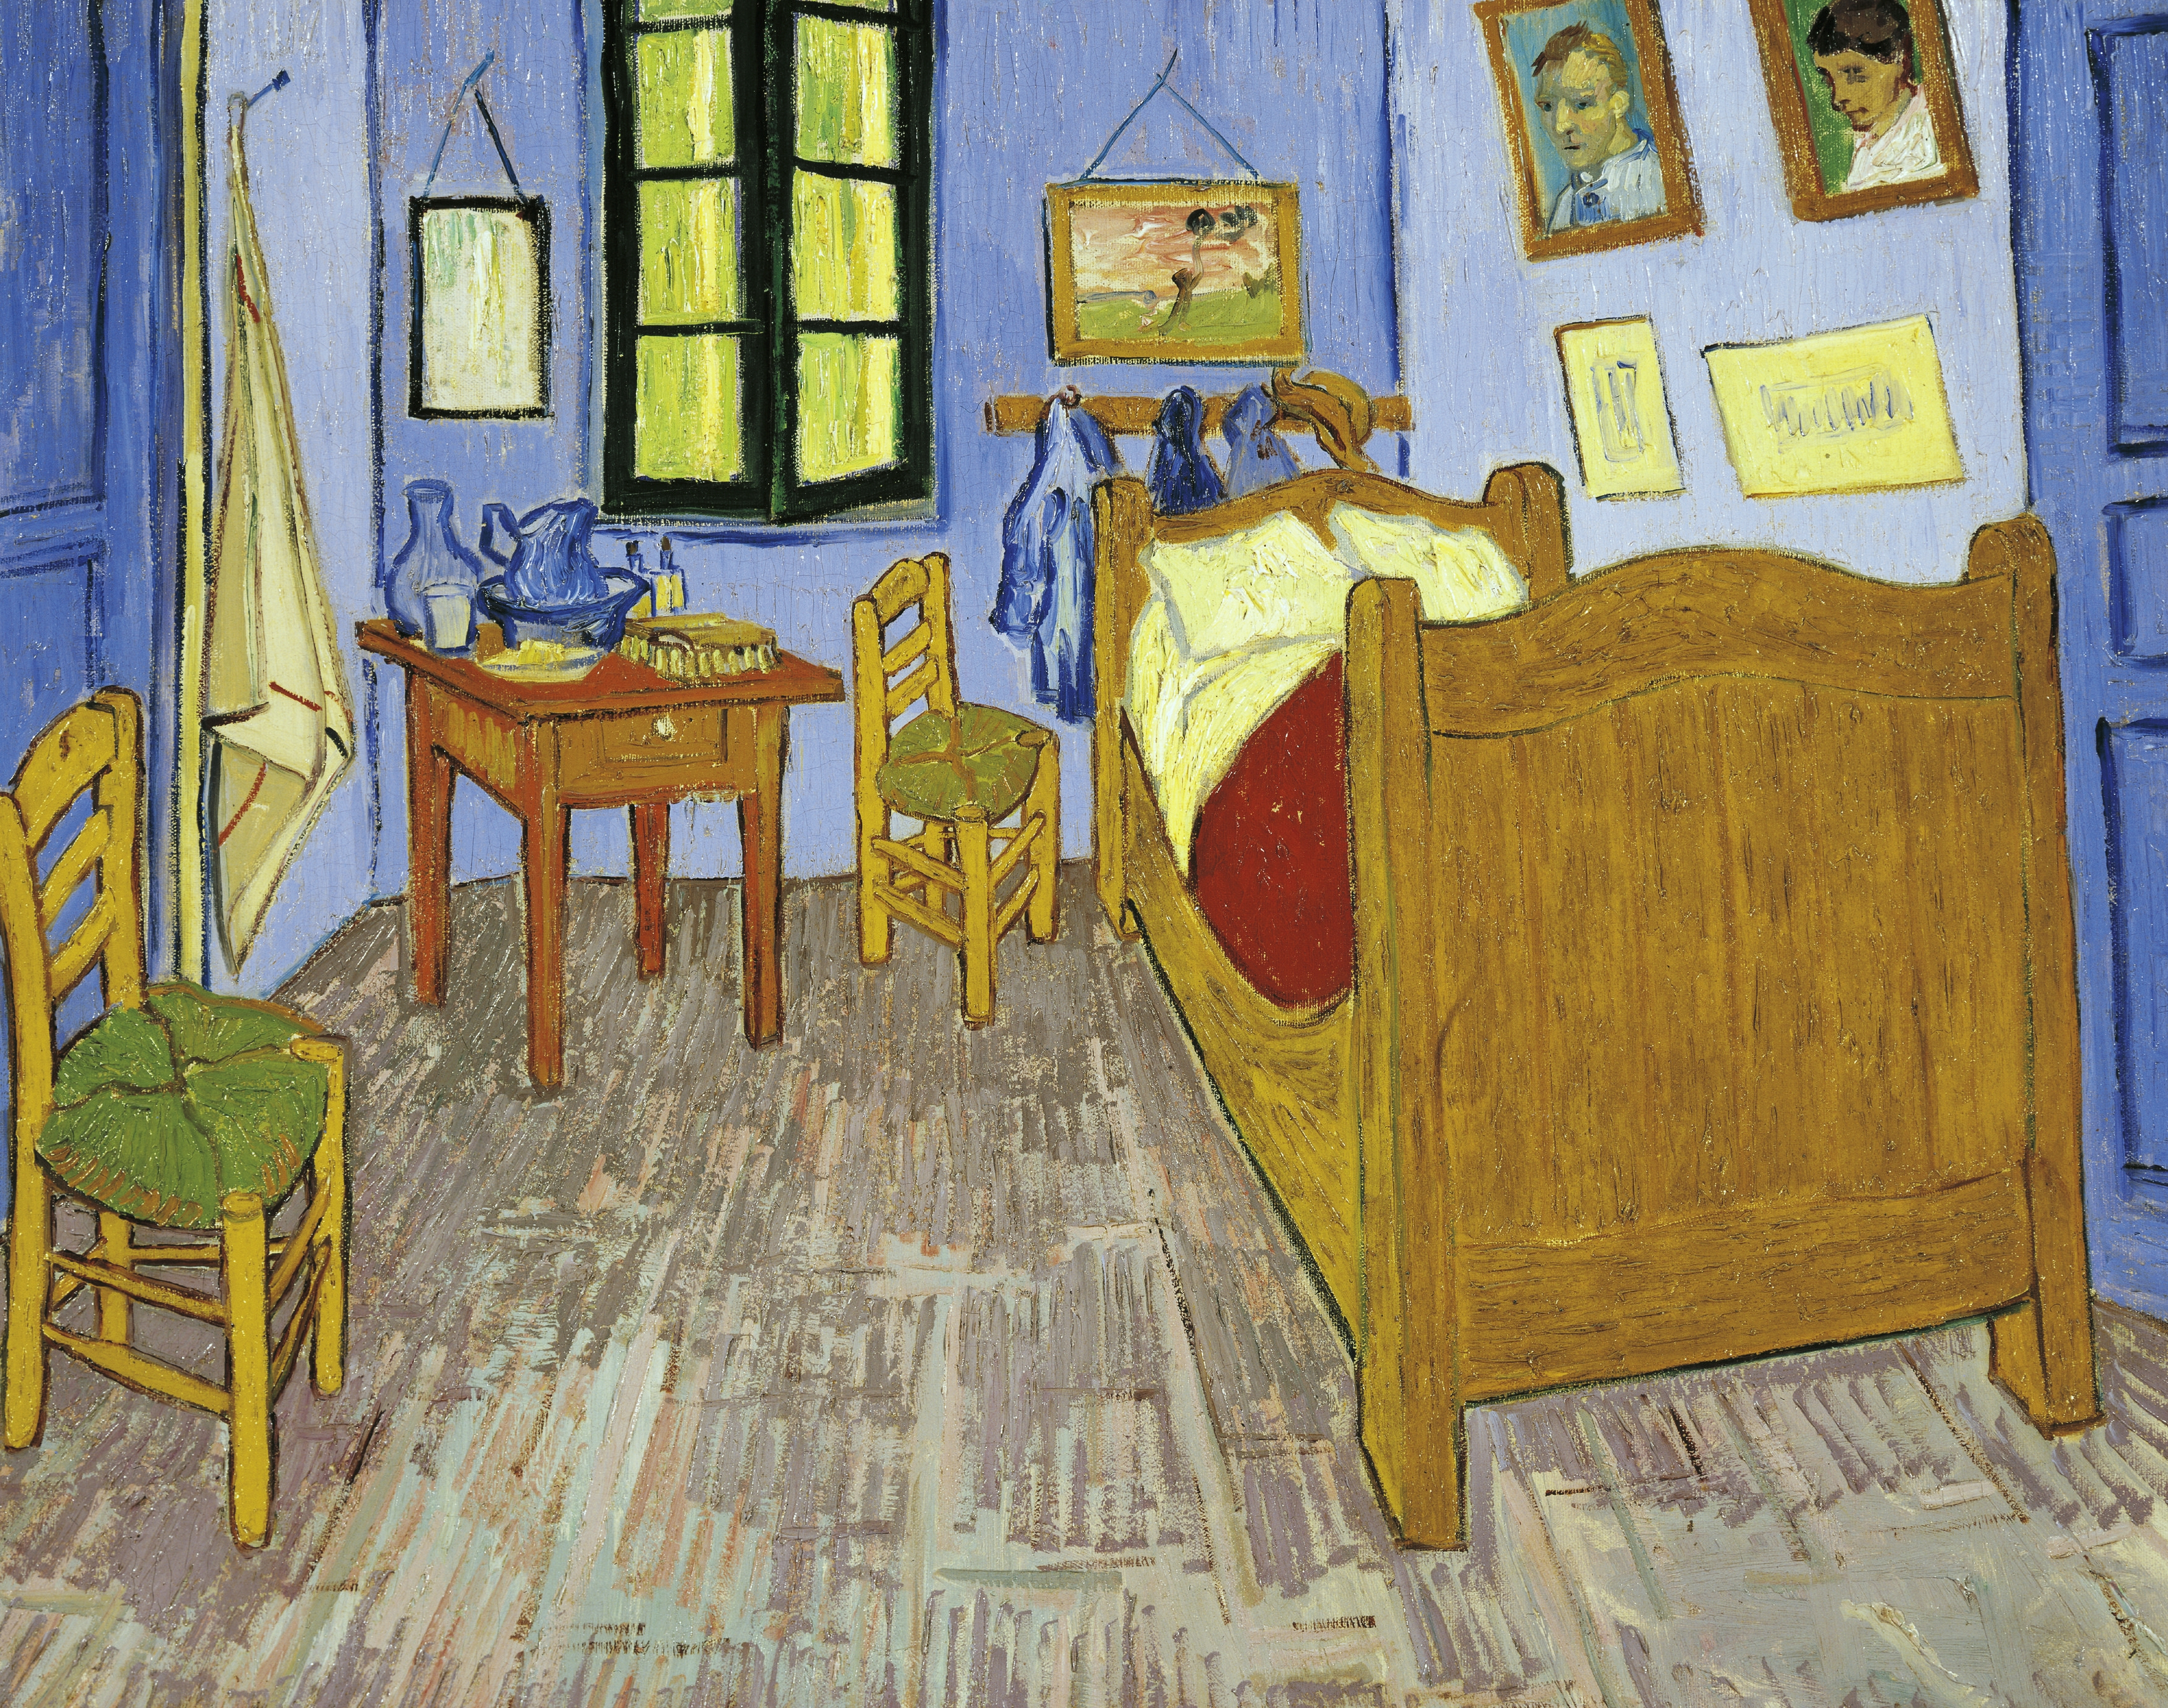 Van Gogh's Bedroom in Arles, 1889, oil on canvas, 57.5 x 74 cm. Version preserved in the Musee d'Orsay in Paris. (Getty Images)